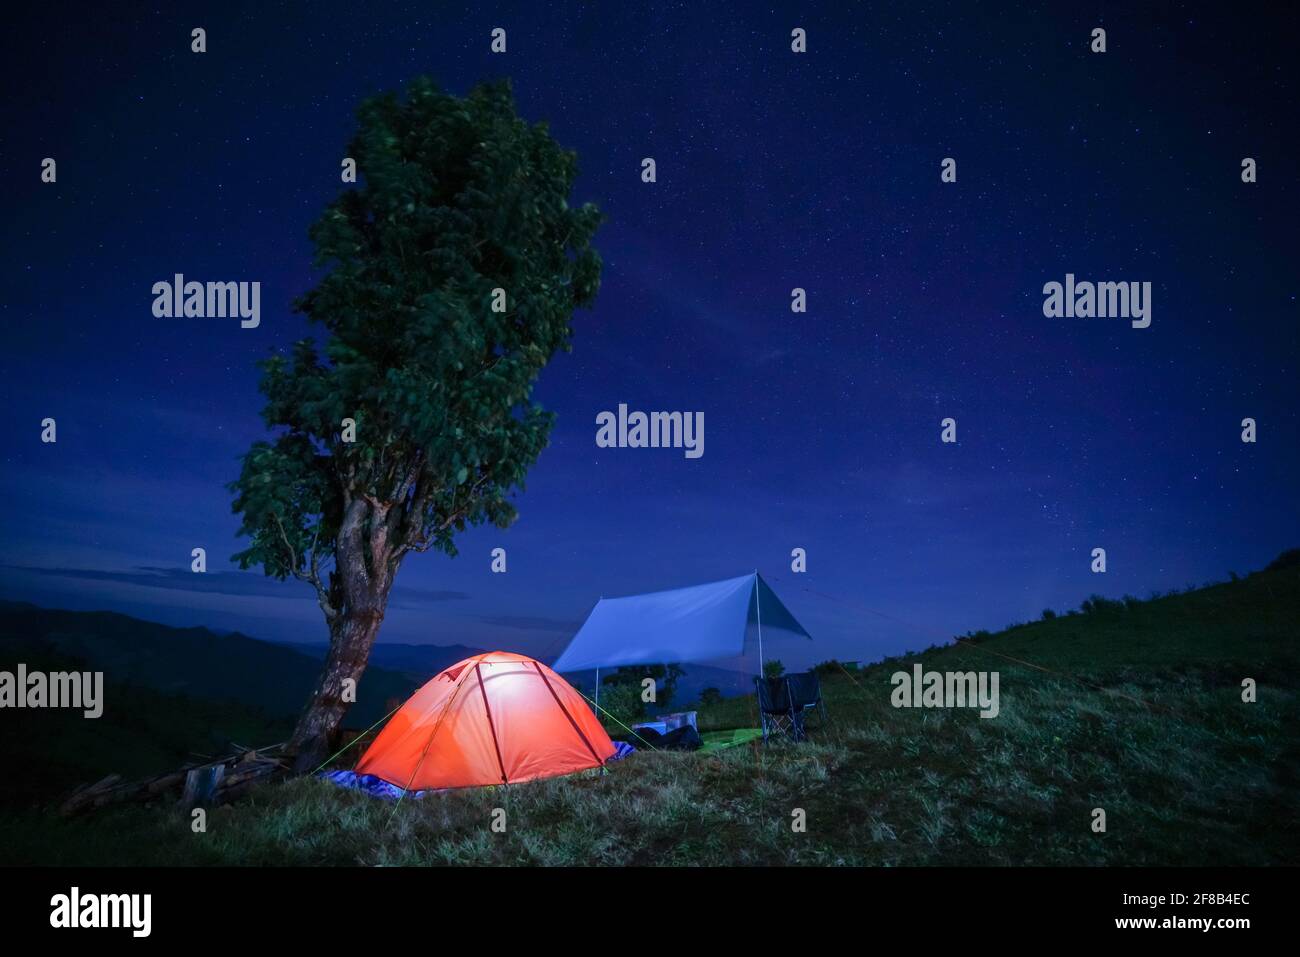 https://c8.alamy.com/comp/2F8B4EC/glowing-orange-tent-in-the-mountains-under-dramatic-sky-2F8B4EC.jpg